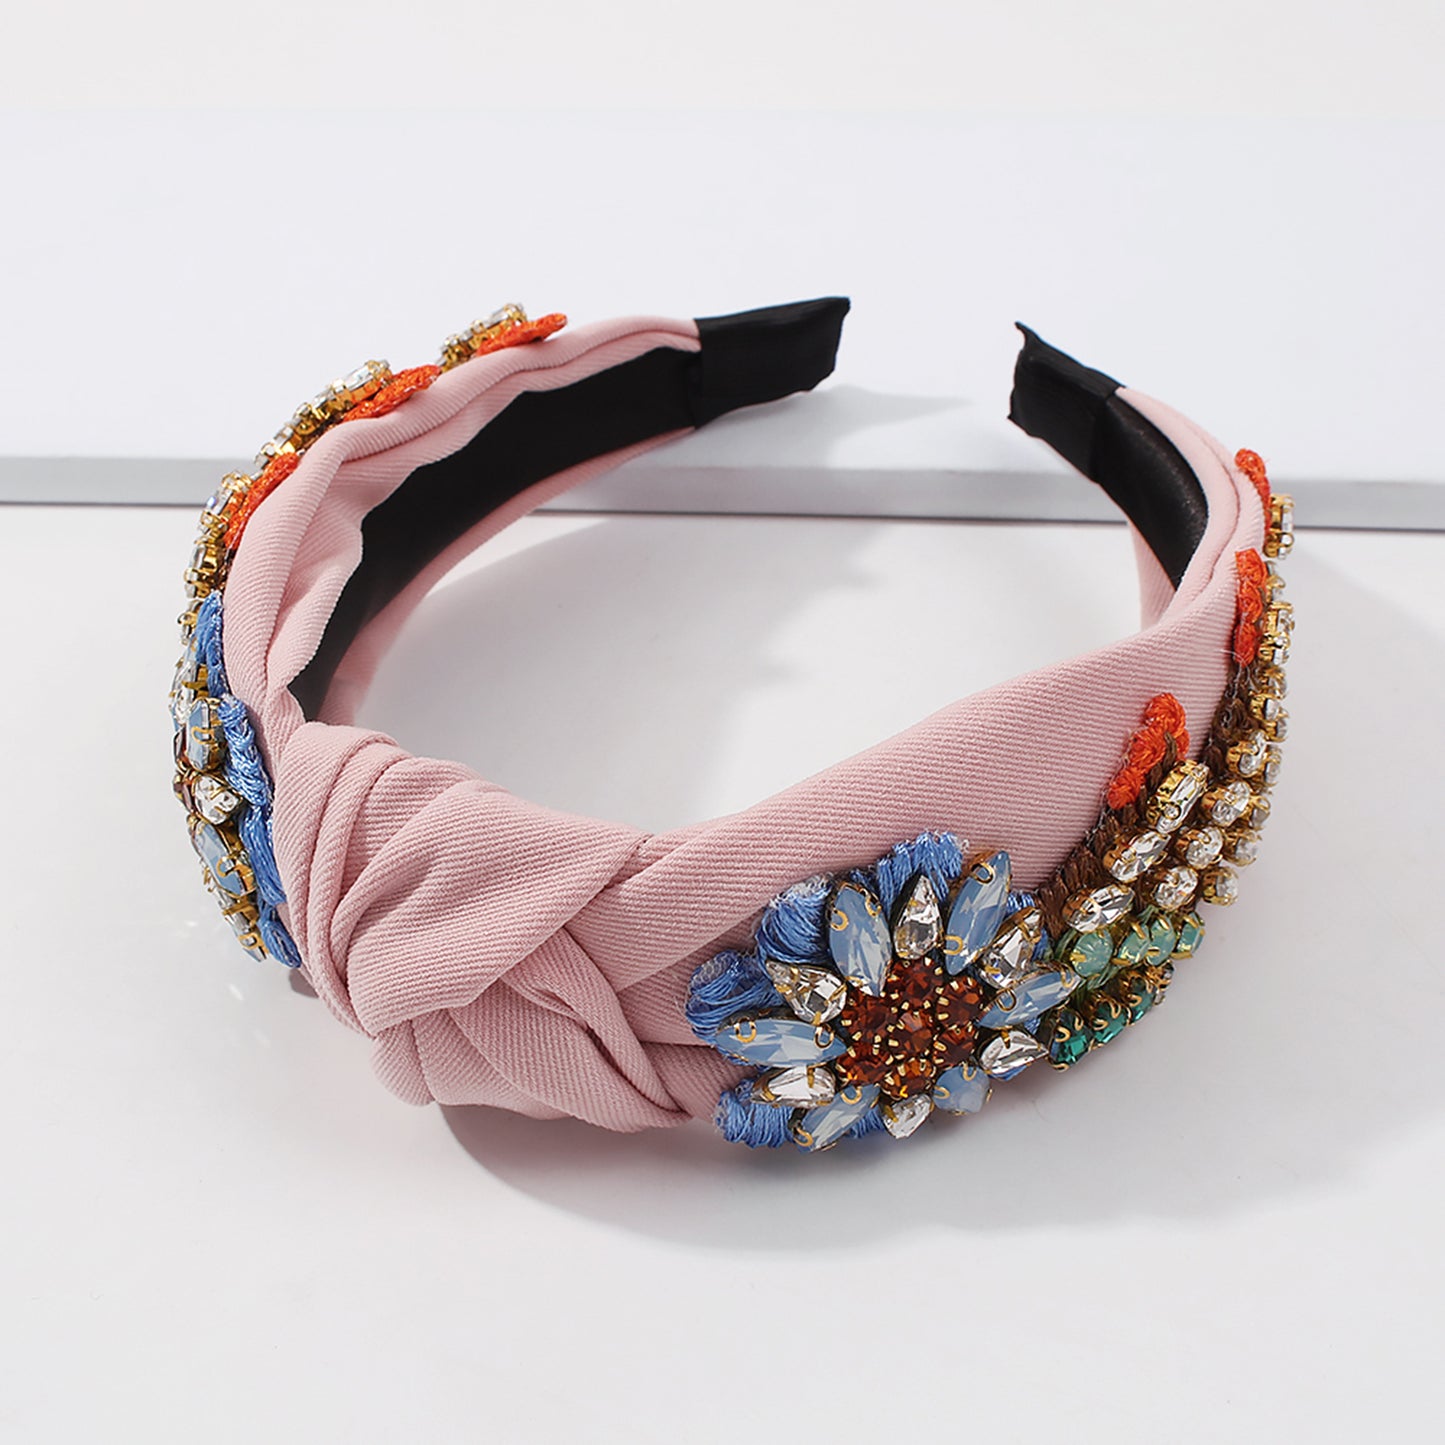 Topknot Rhinestone Flower Embellished Sparkly Crystal Wide Headband medyjewelry